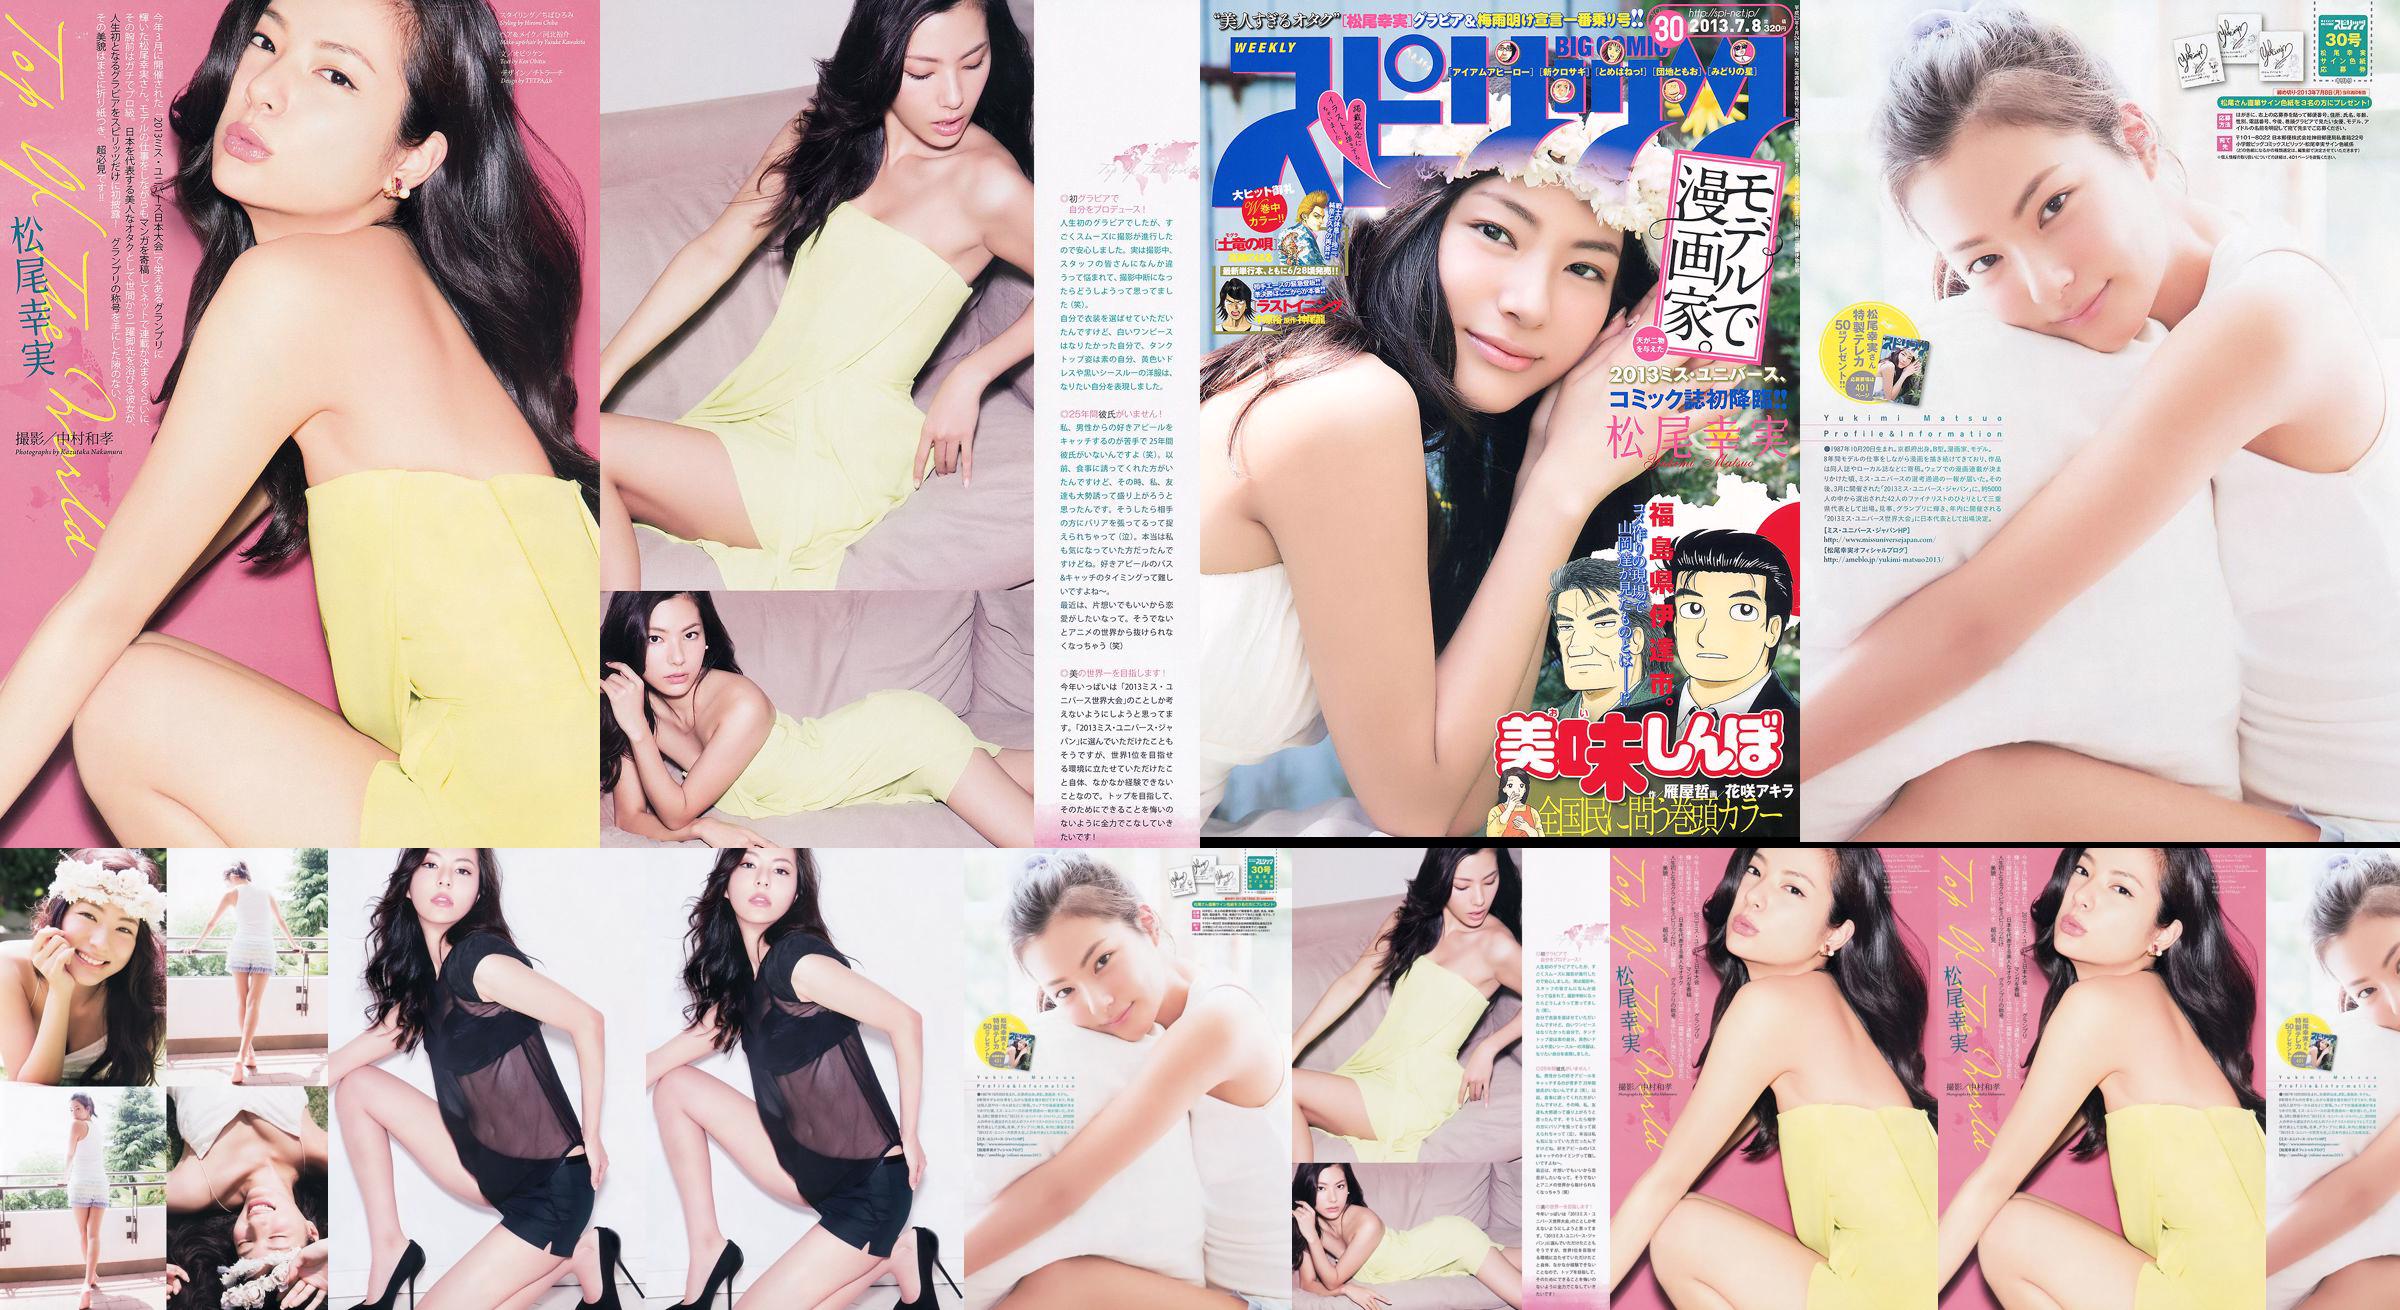 [Wöchentliche große Comic-Geister] Komi Matsuo 2013 No.30 Photo Magazine No.06f998 Seite 1